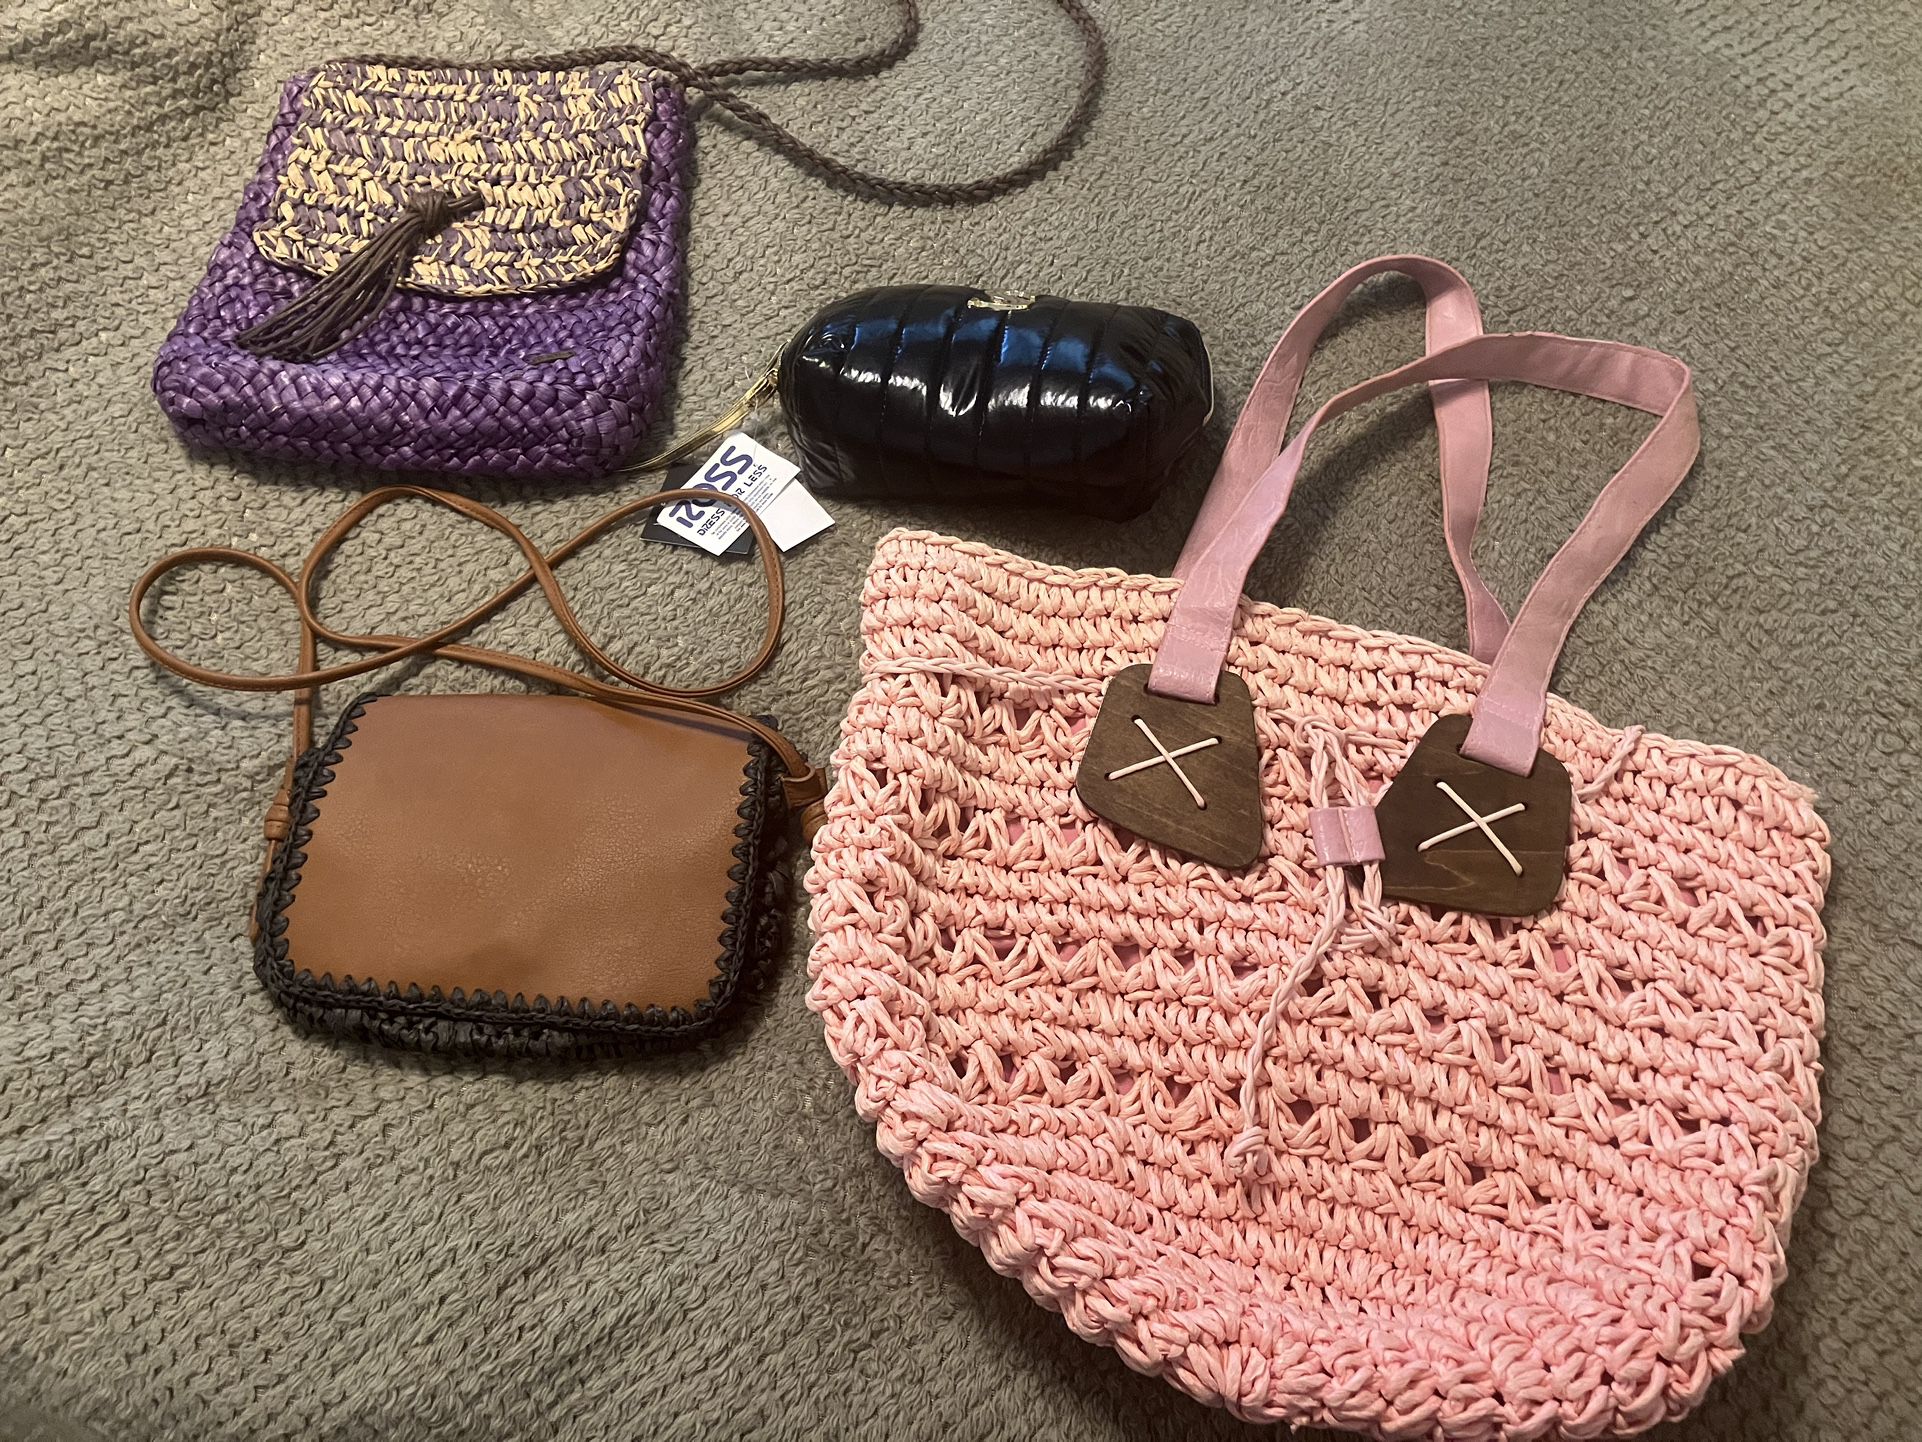 Variety of handbags/purses